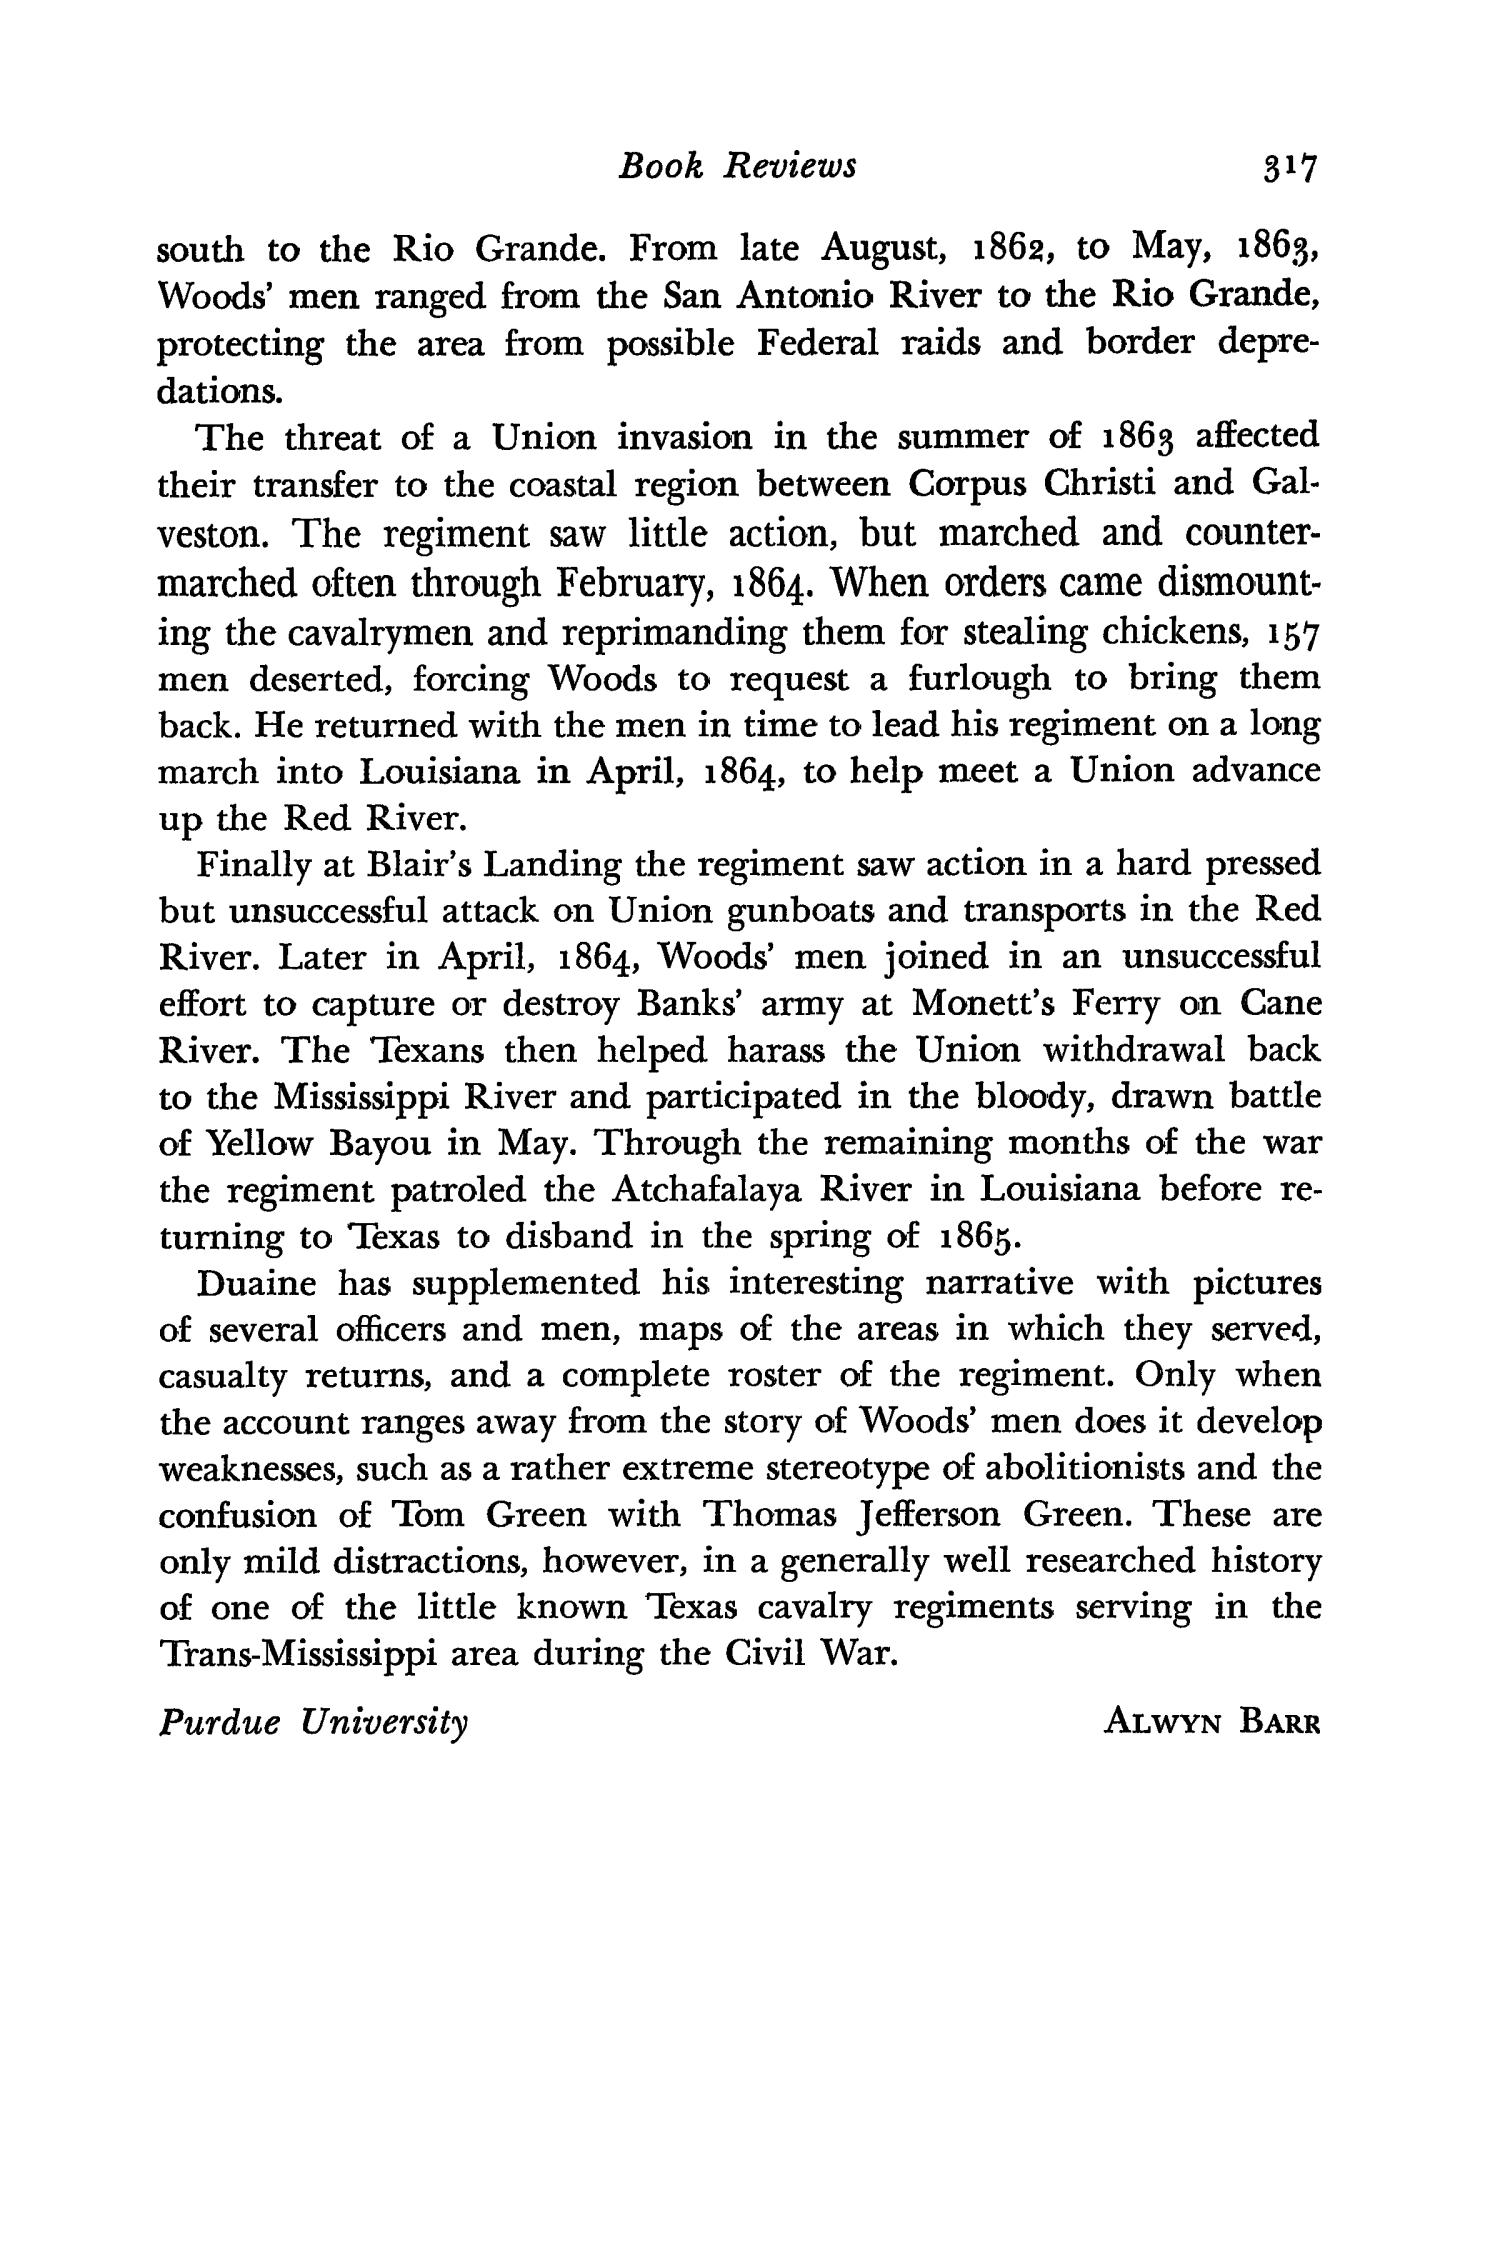 The Southwestern Historical Quarterly, Volume 71, July 1967 - April, 1968
                                                
                                                    317
                                                